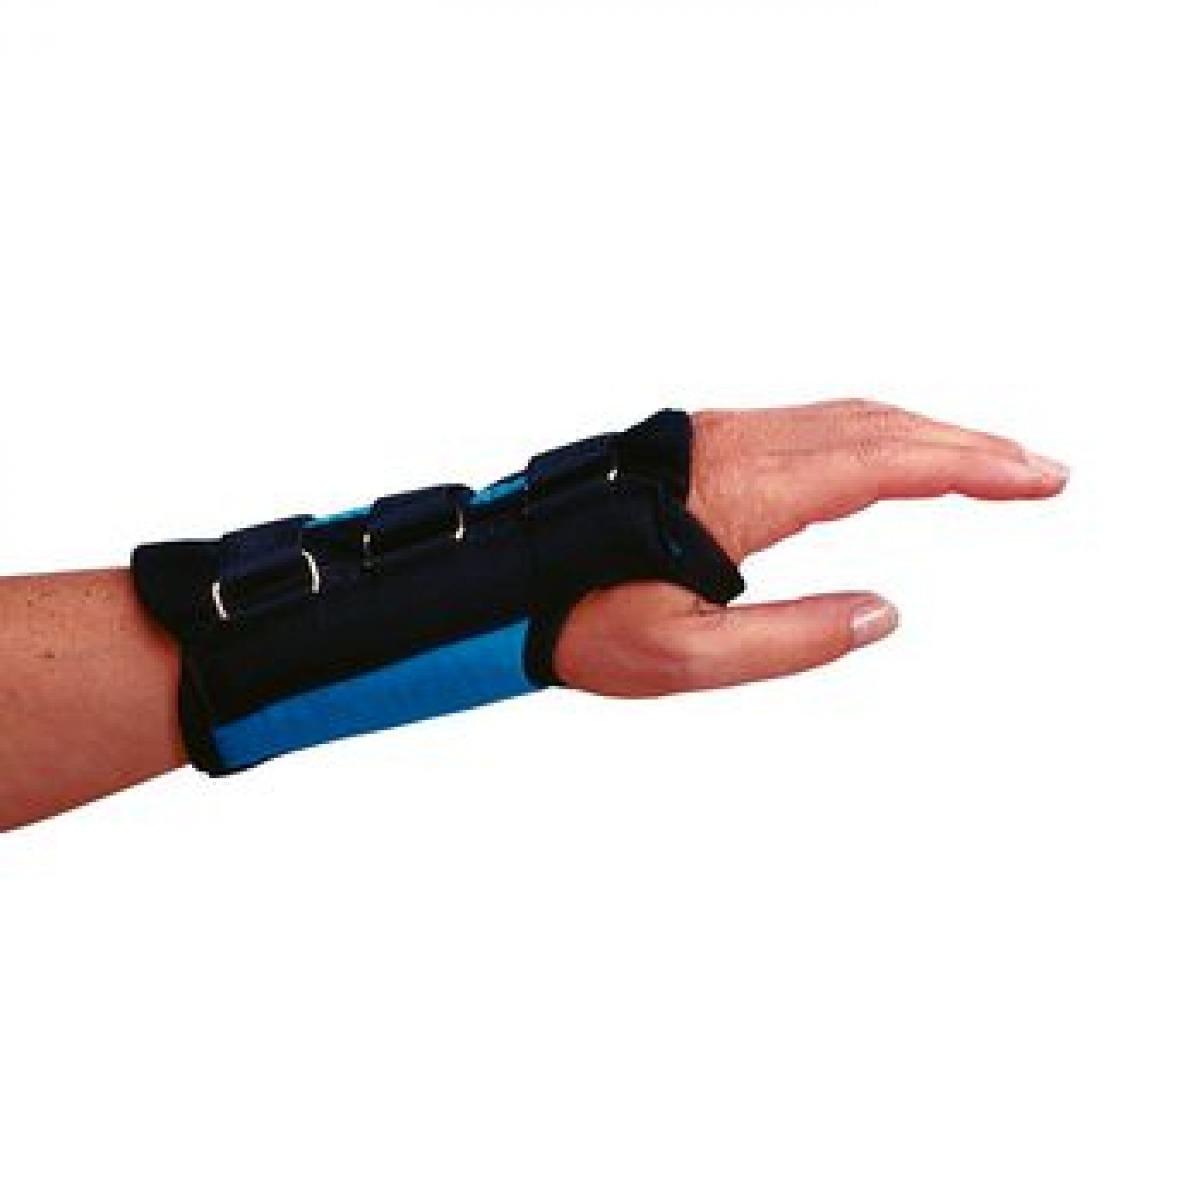 Rolyan Teal D-Ring Wrist Brace